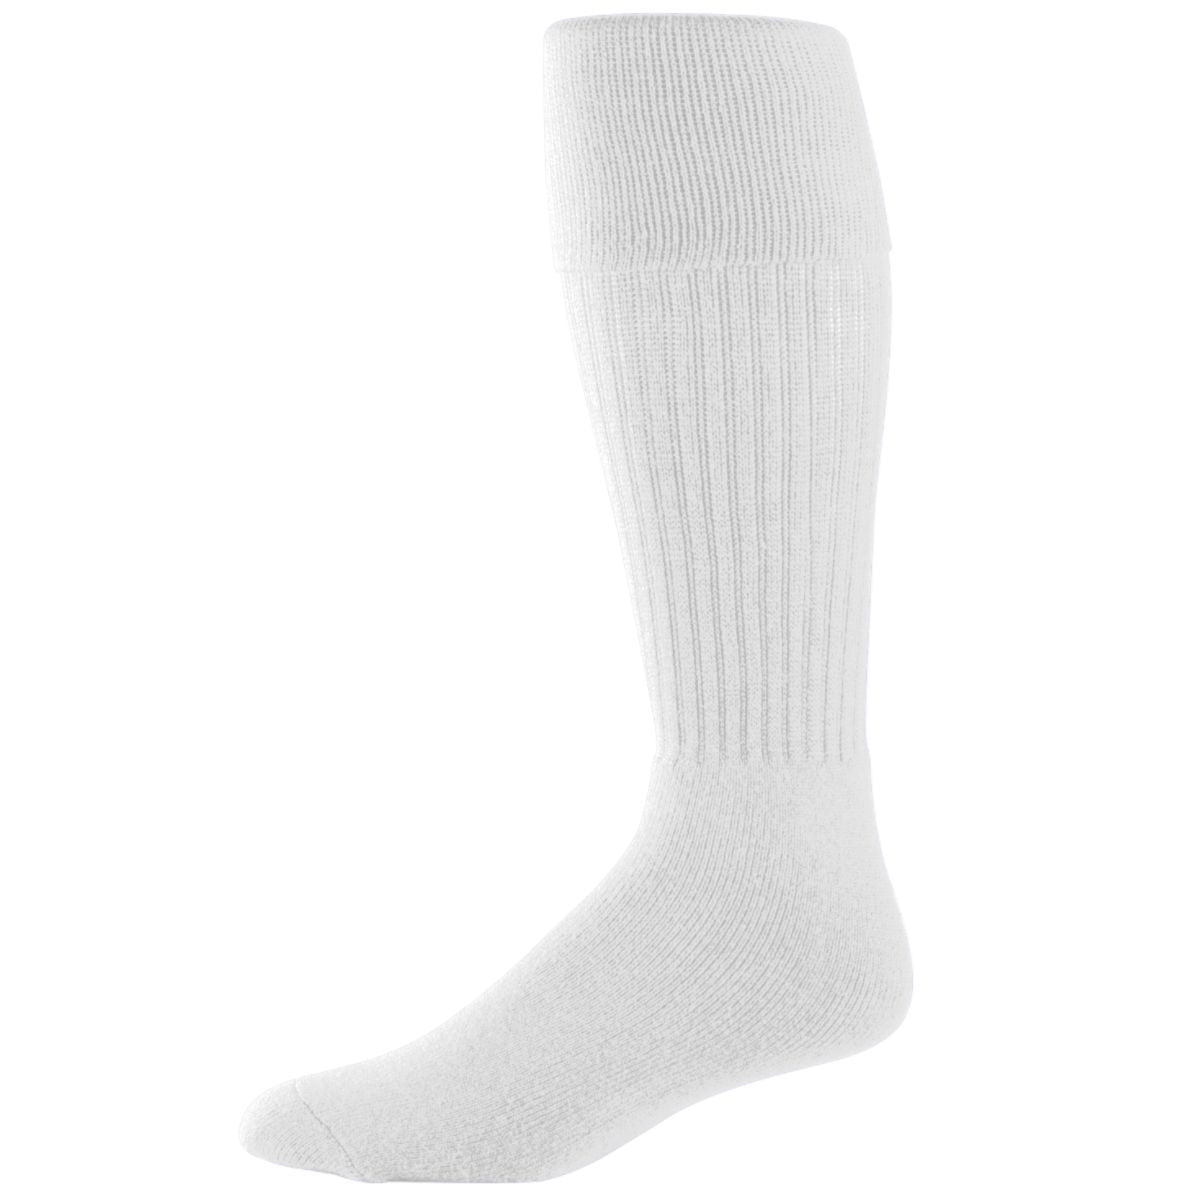 Soccer Socks - 6031